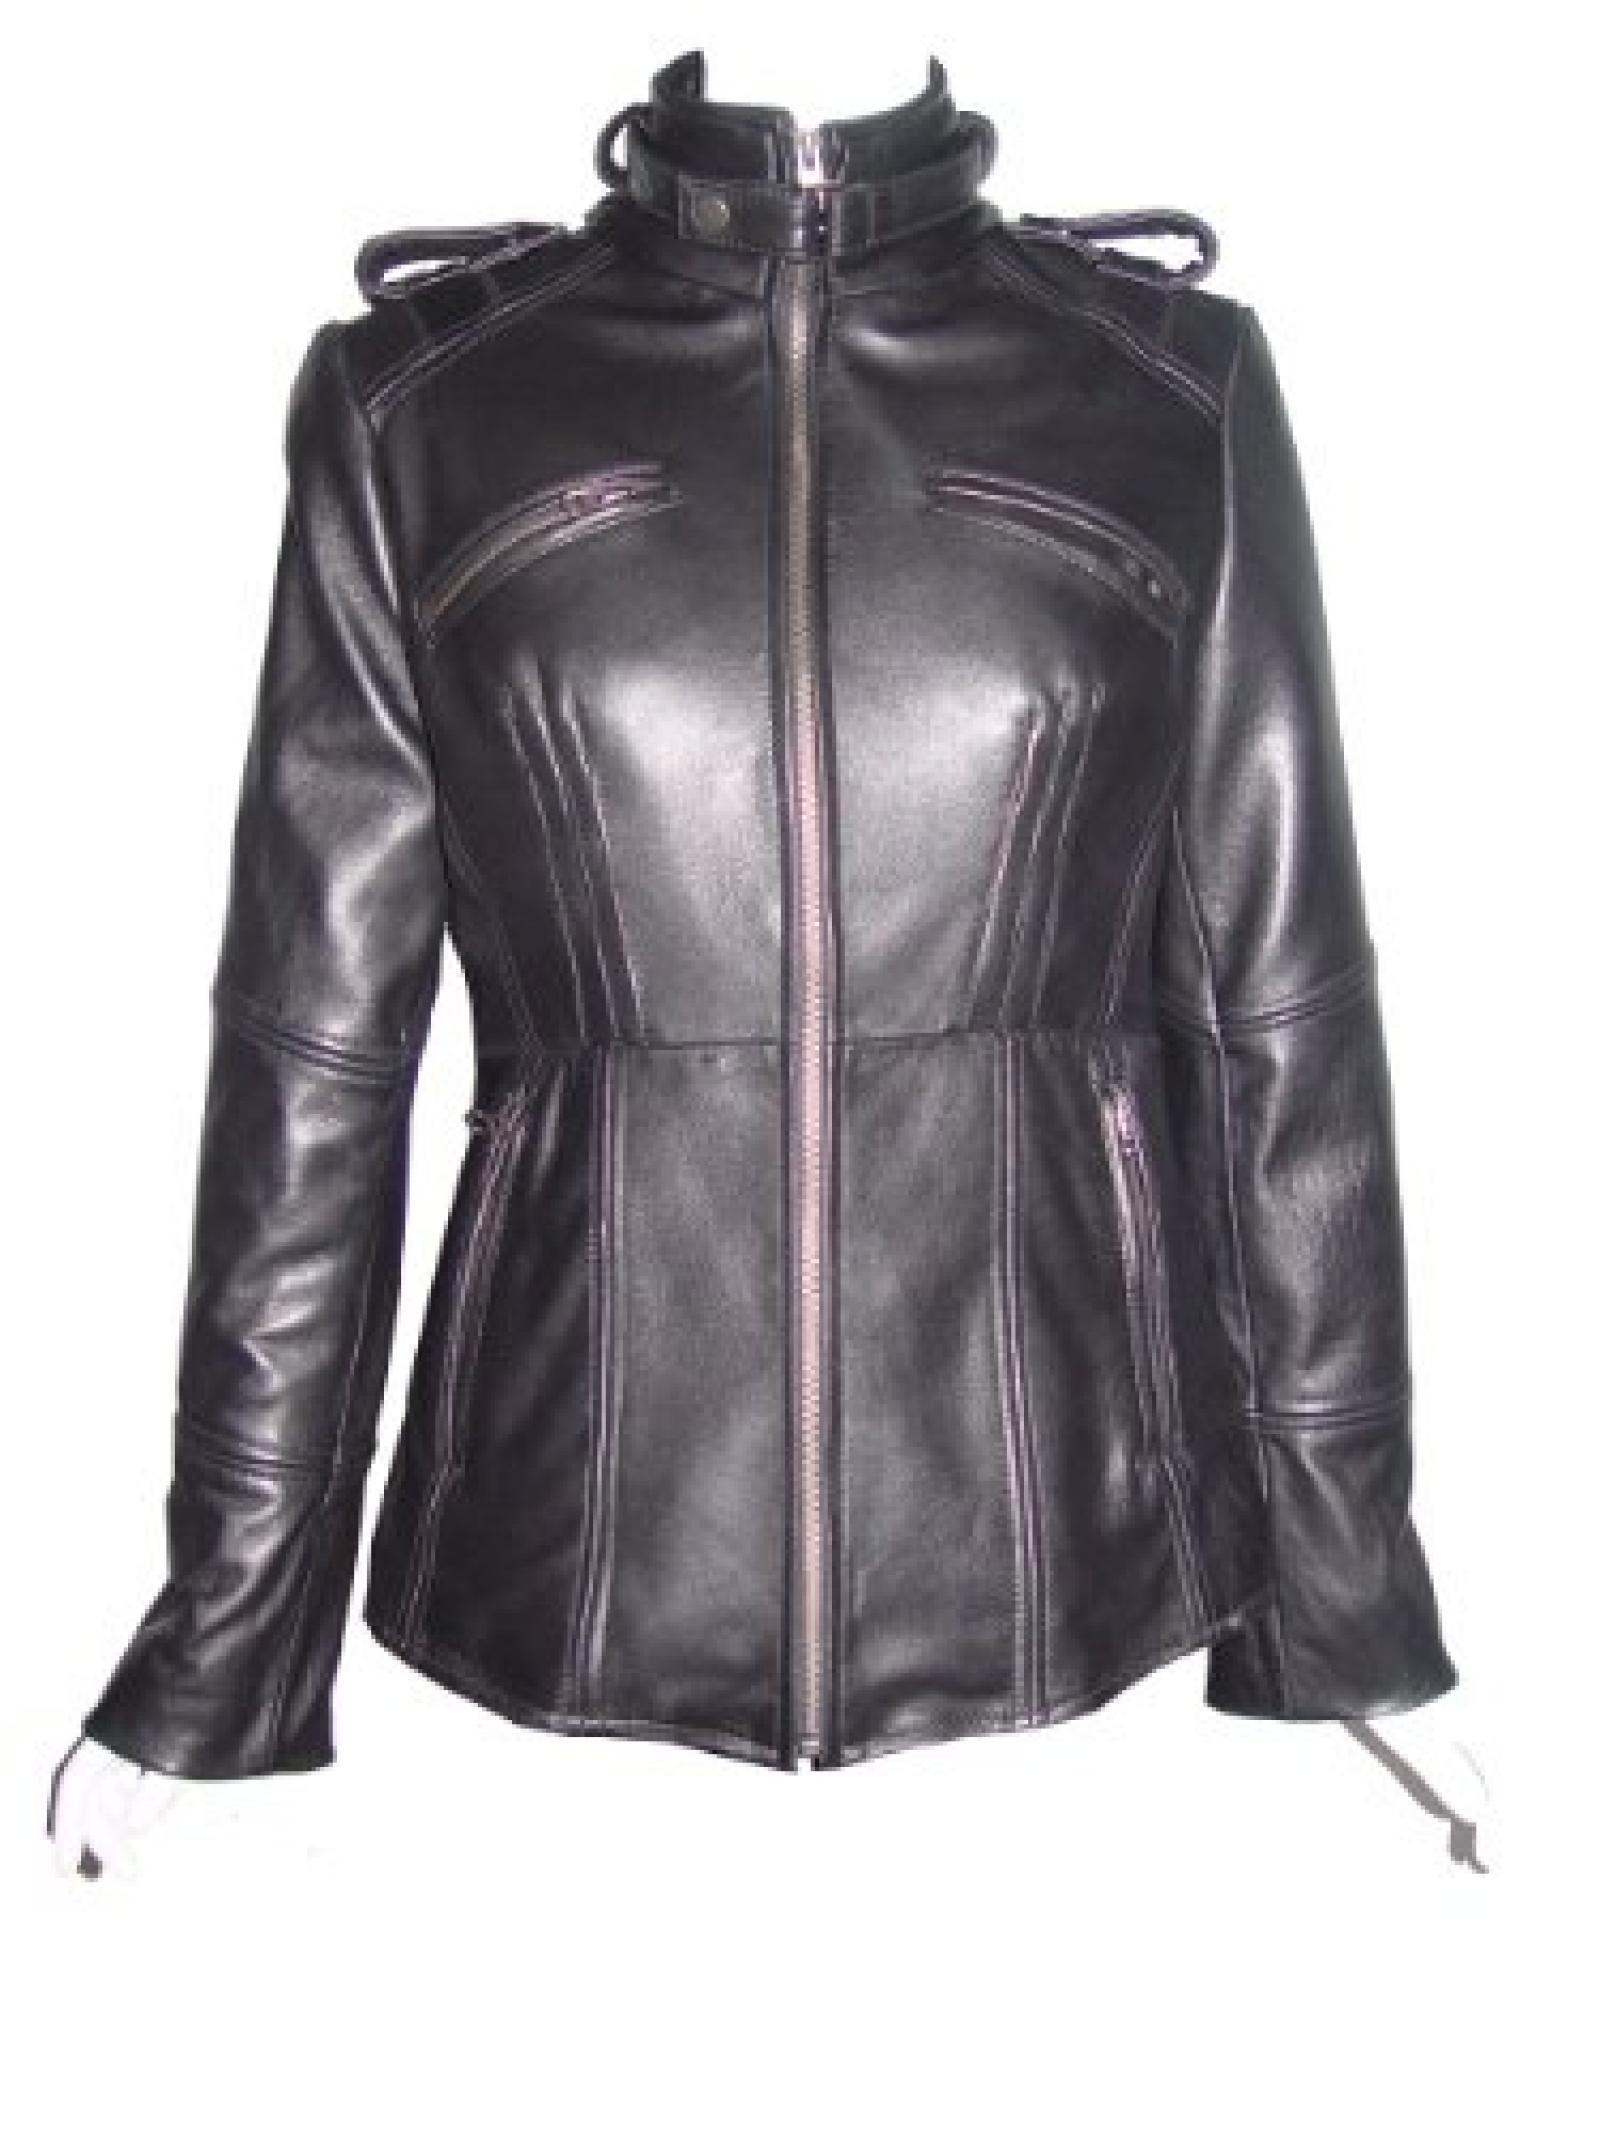 Nettailor Women 4205 Leather Casual Short Jacket Zip Front Unbalanced Pocket 